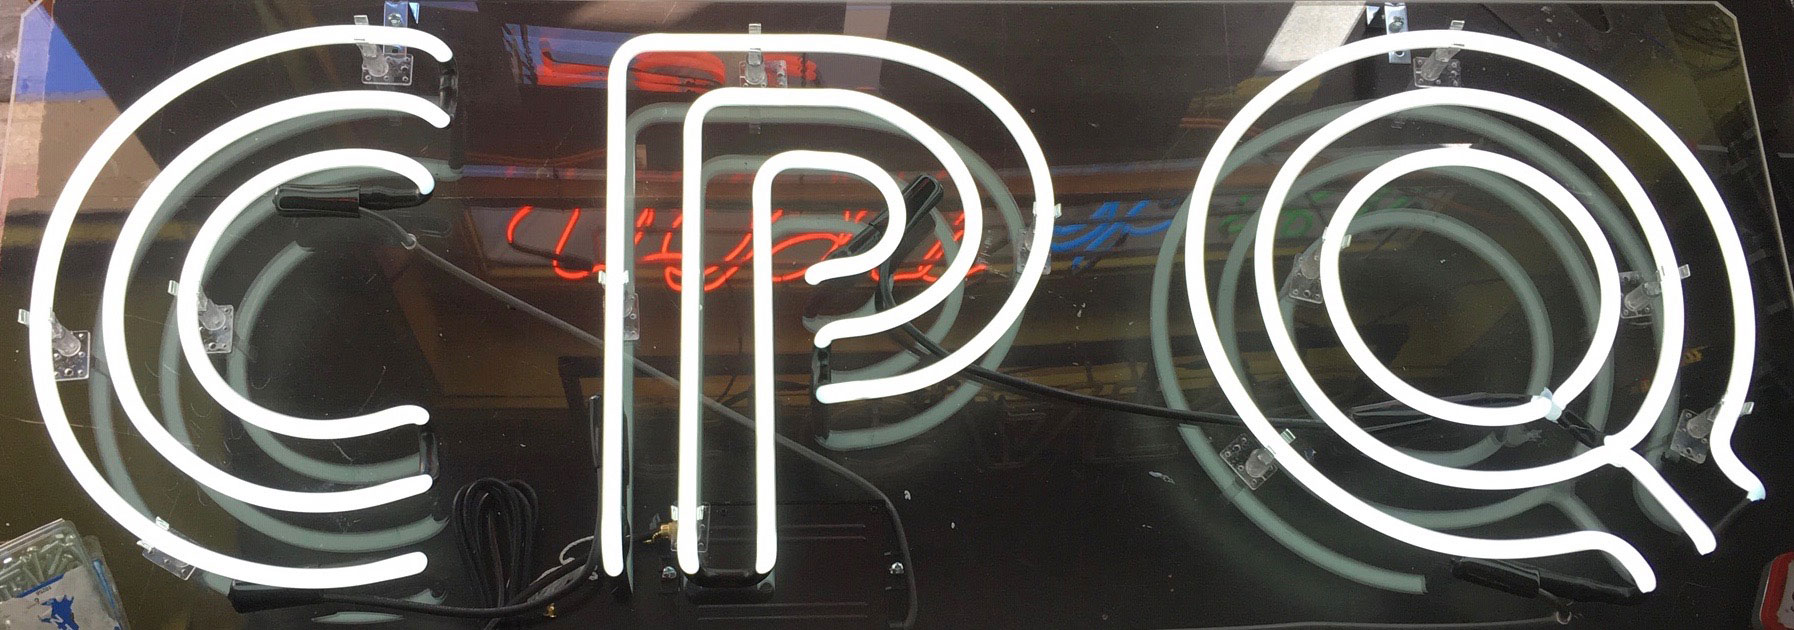 CPQ Neon Sign